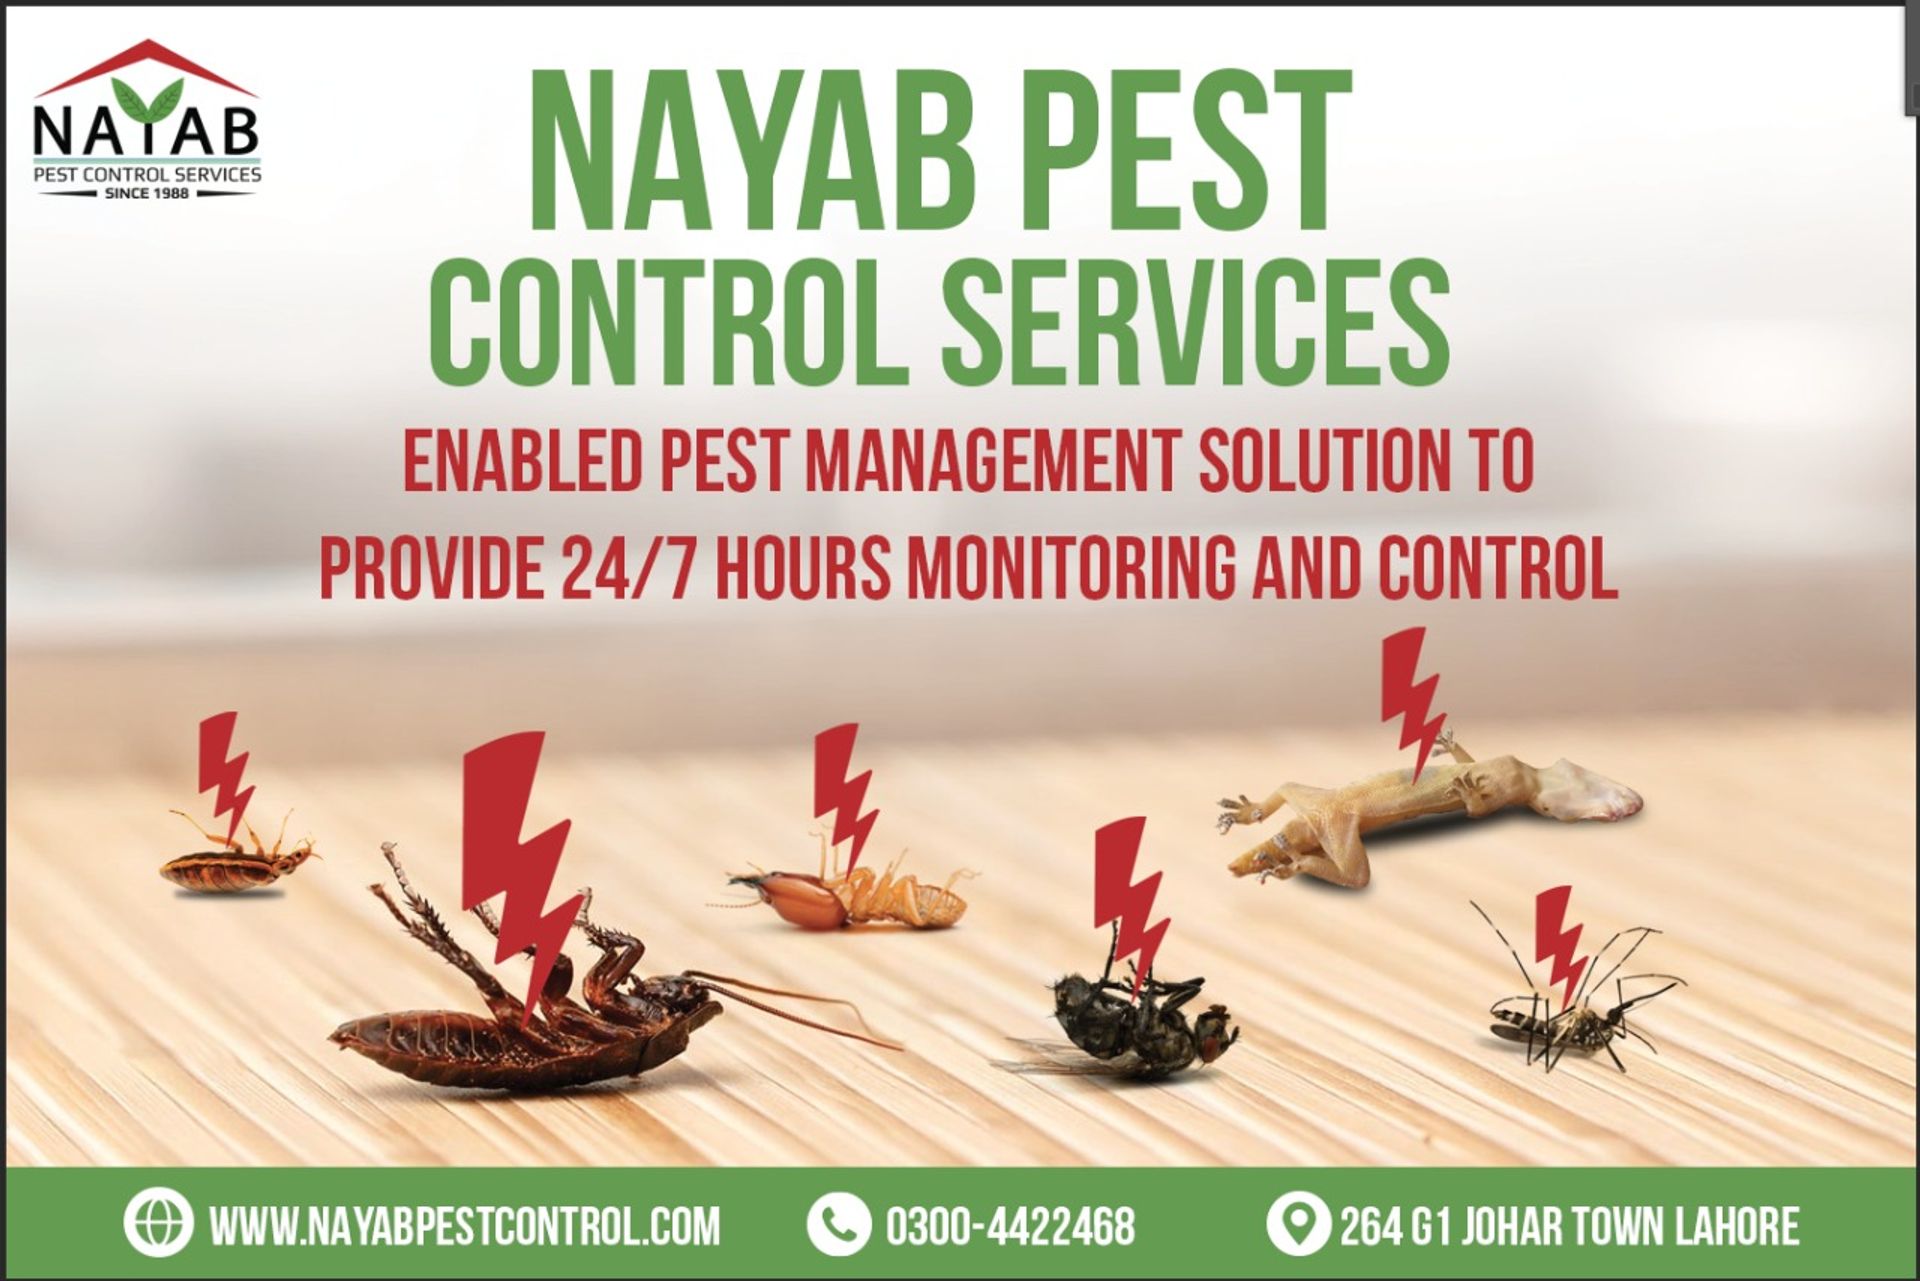 Nayab Pest Control Services